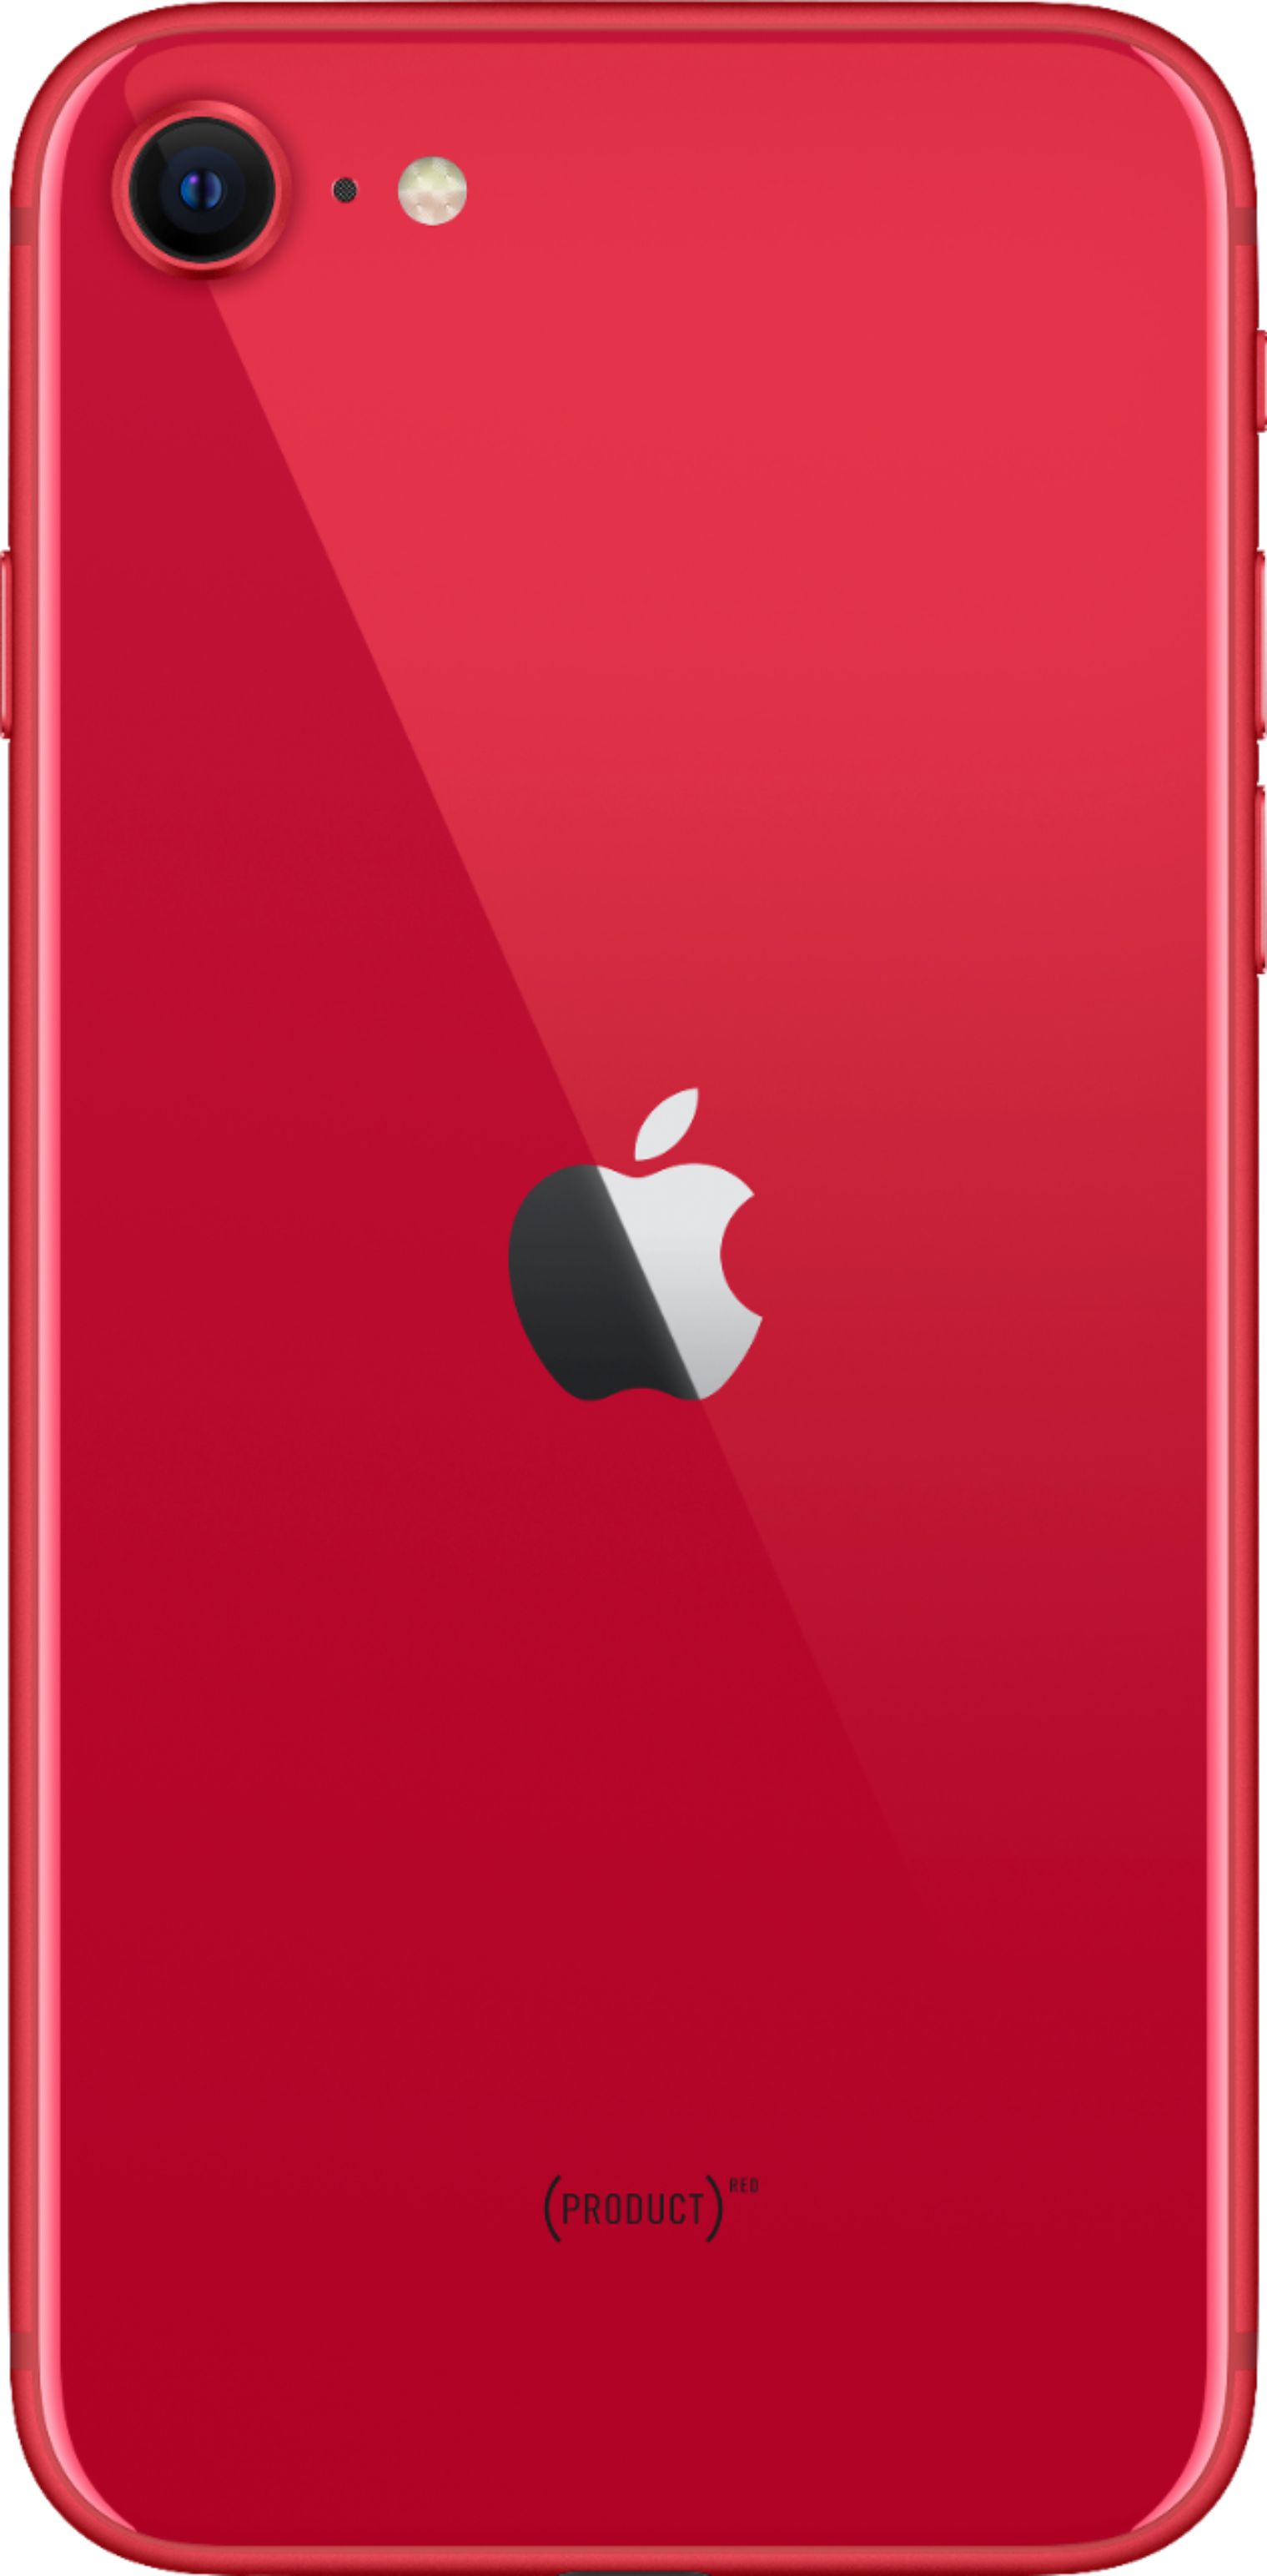 【新品未使用】iPhone SE2 RED 64GB